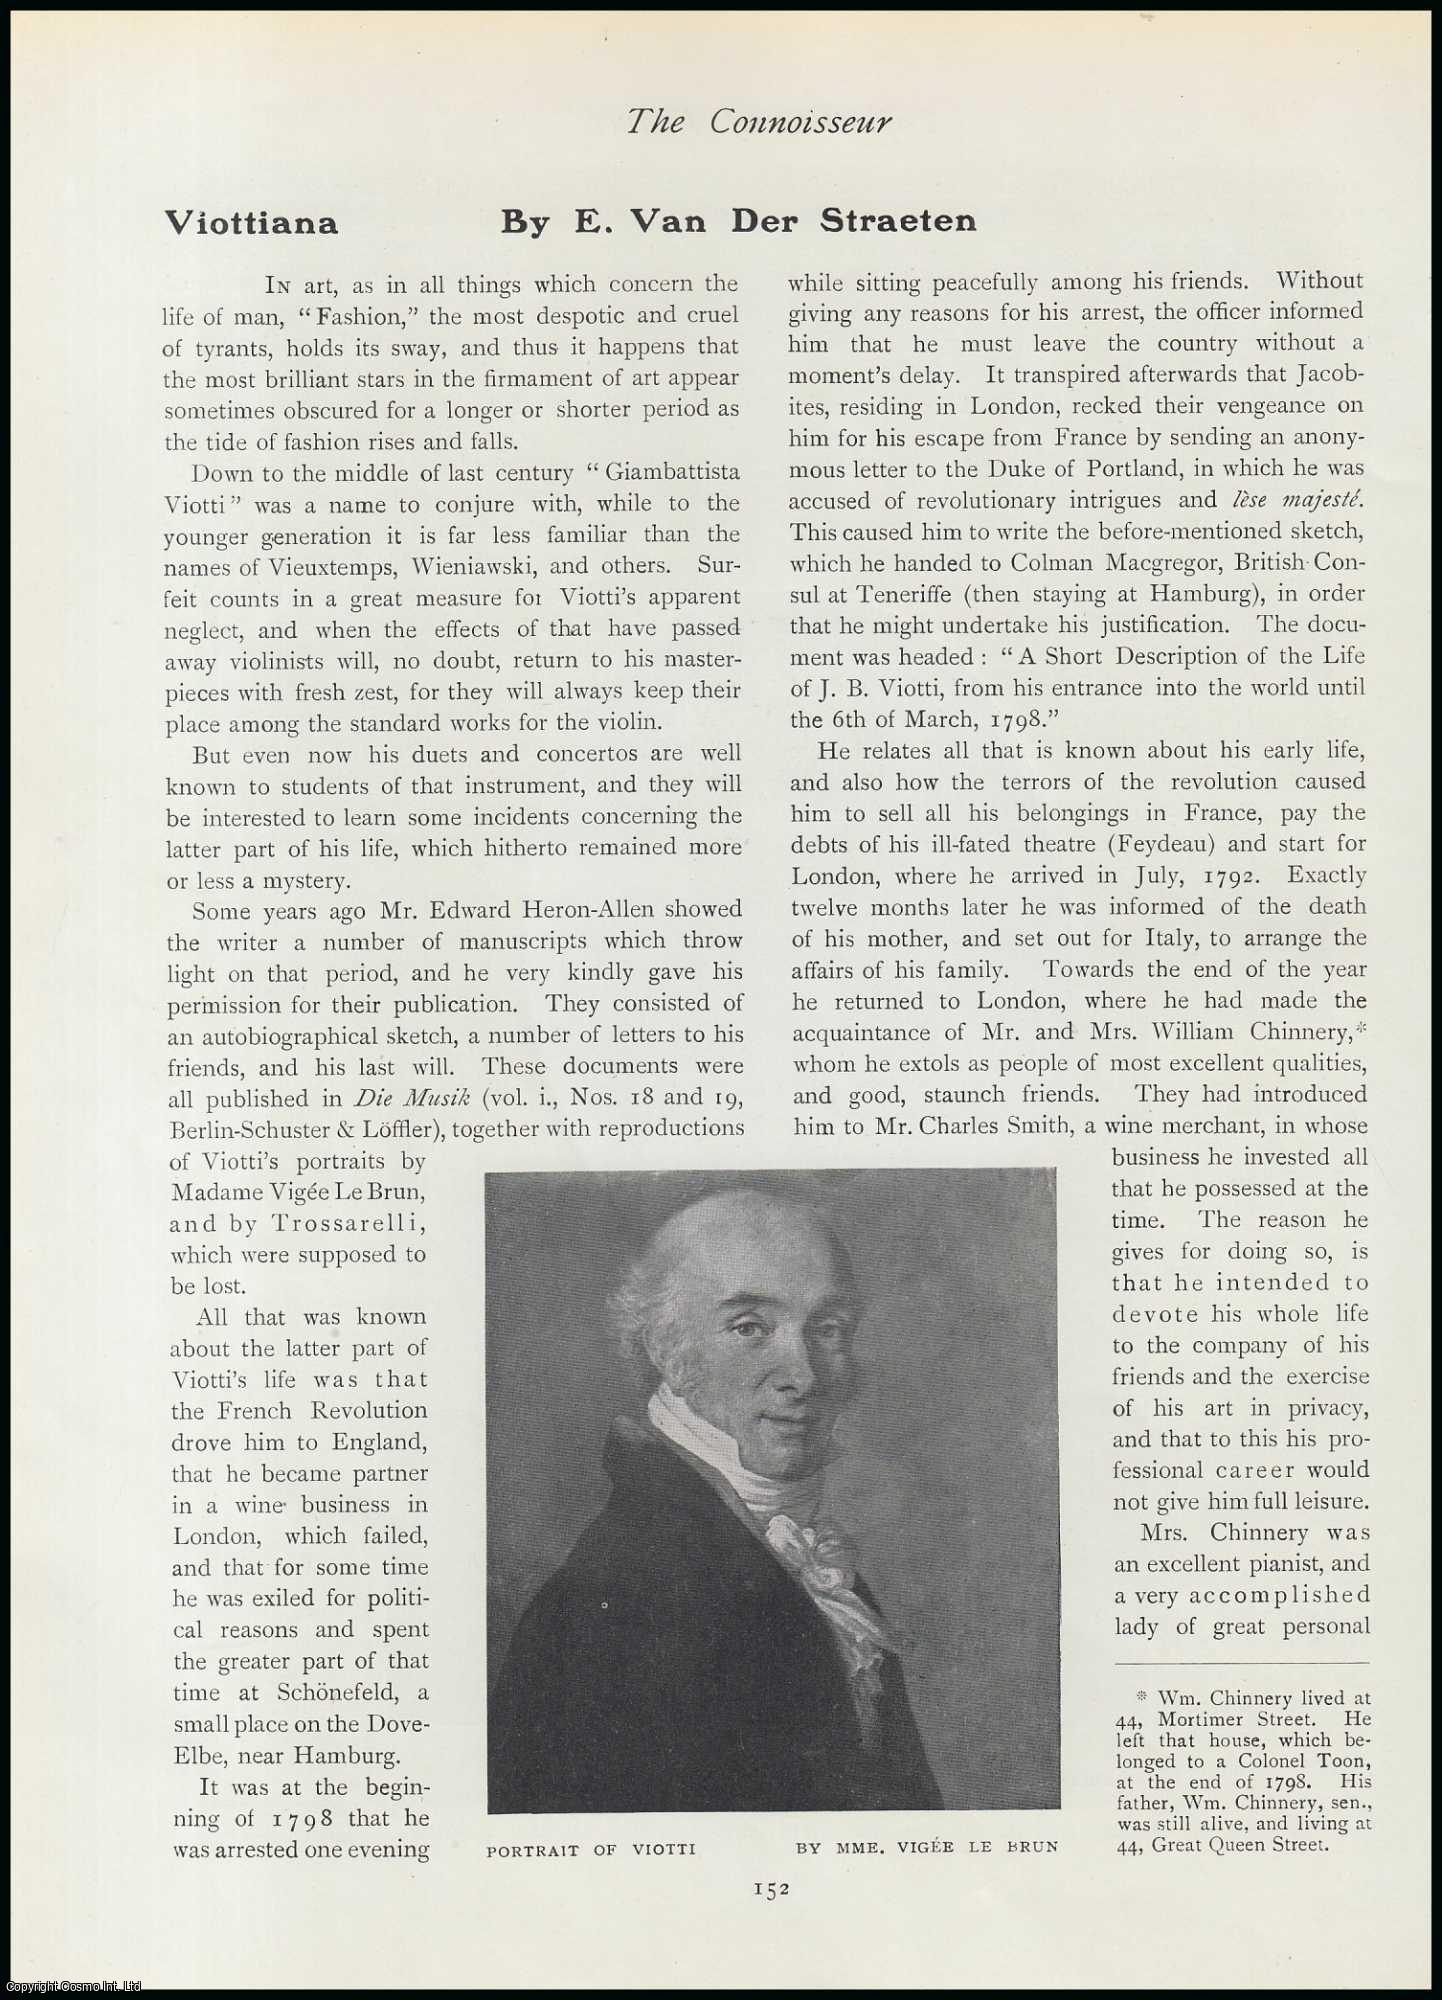 E. Van Der Straeten - Giovanni Battista Viotti (Italian Violinist) : Viottiana. An original article from The Connoisseur, 1911.